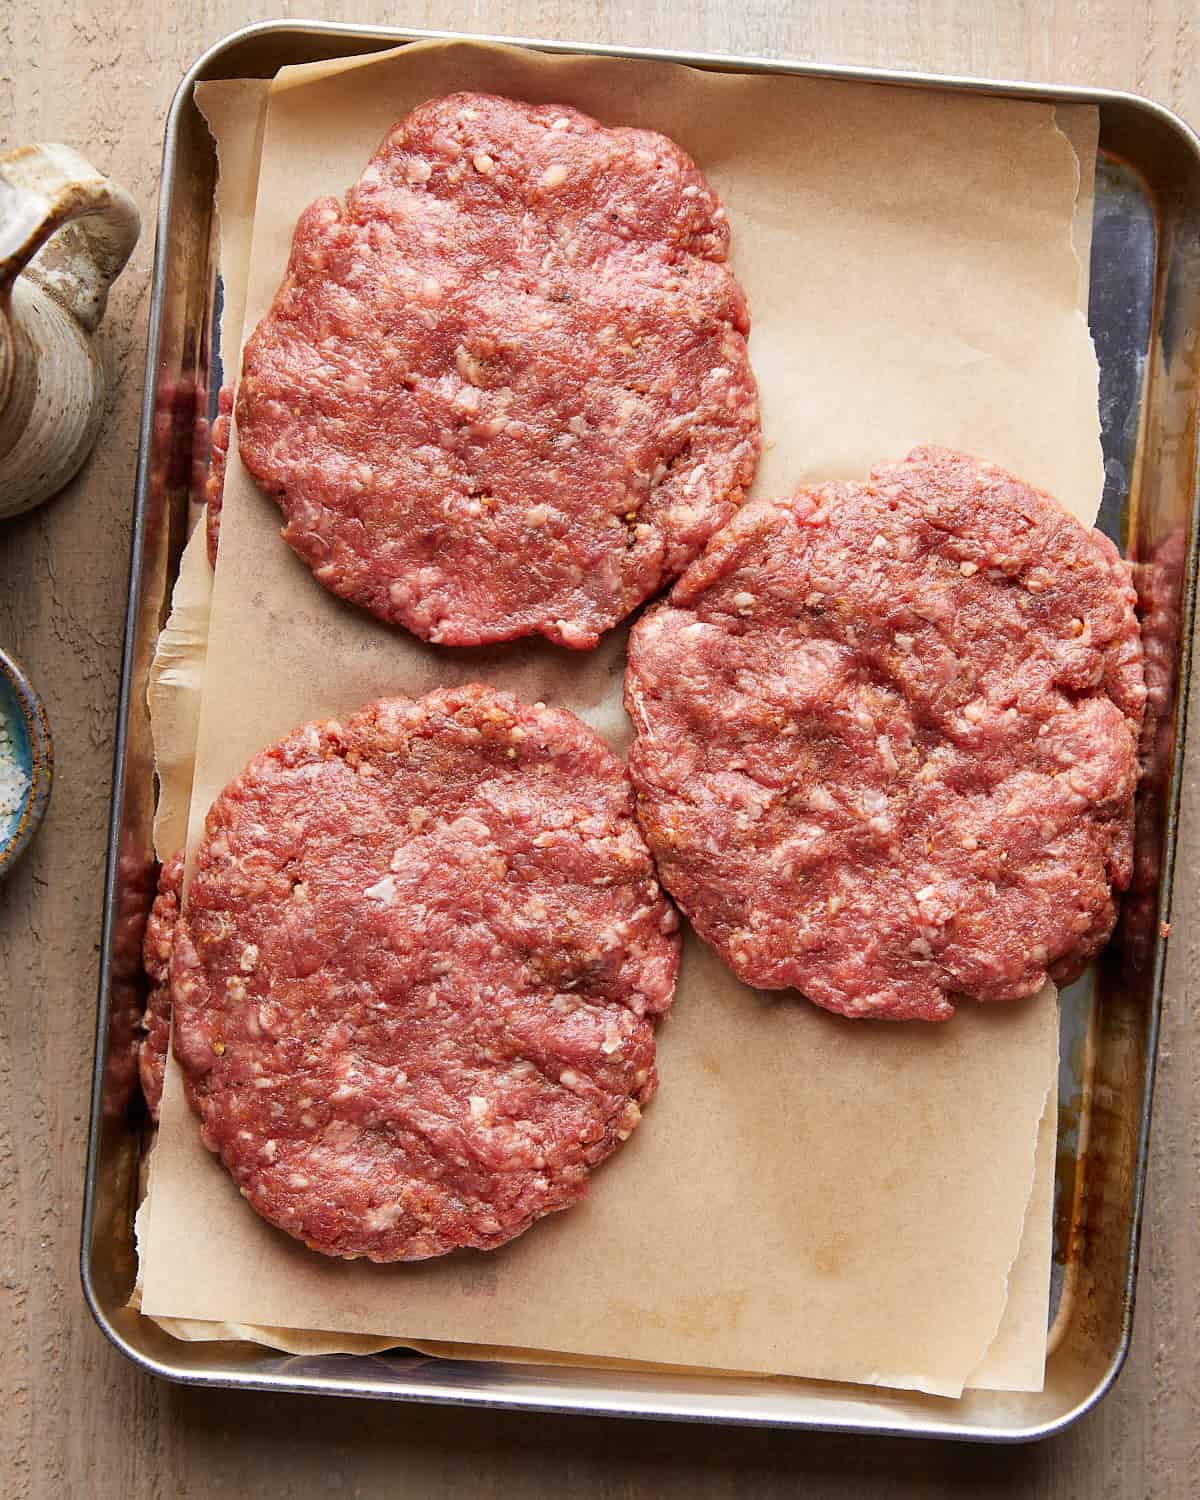 Overhead image of raw hamburger patties.